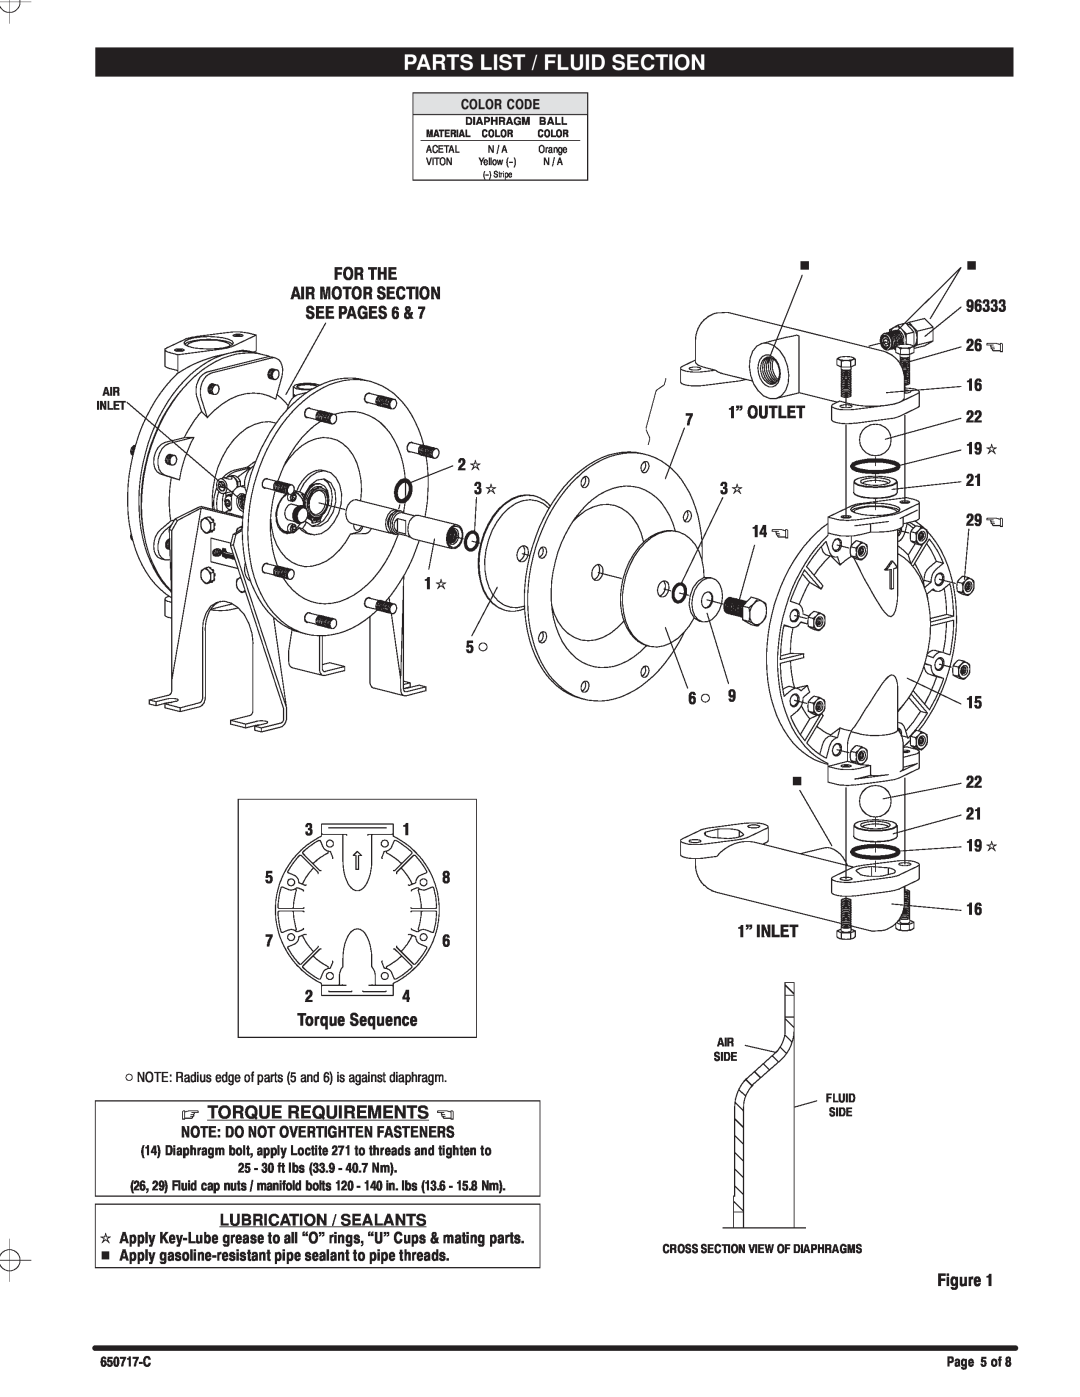 Ingersoll-Rand 650717-C manual k kk, k d d, Lubrication / Sealants, Parts List / Fluid Section, Torque Requirements 